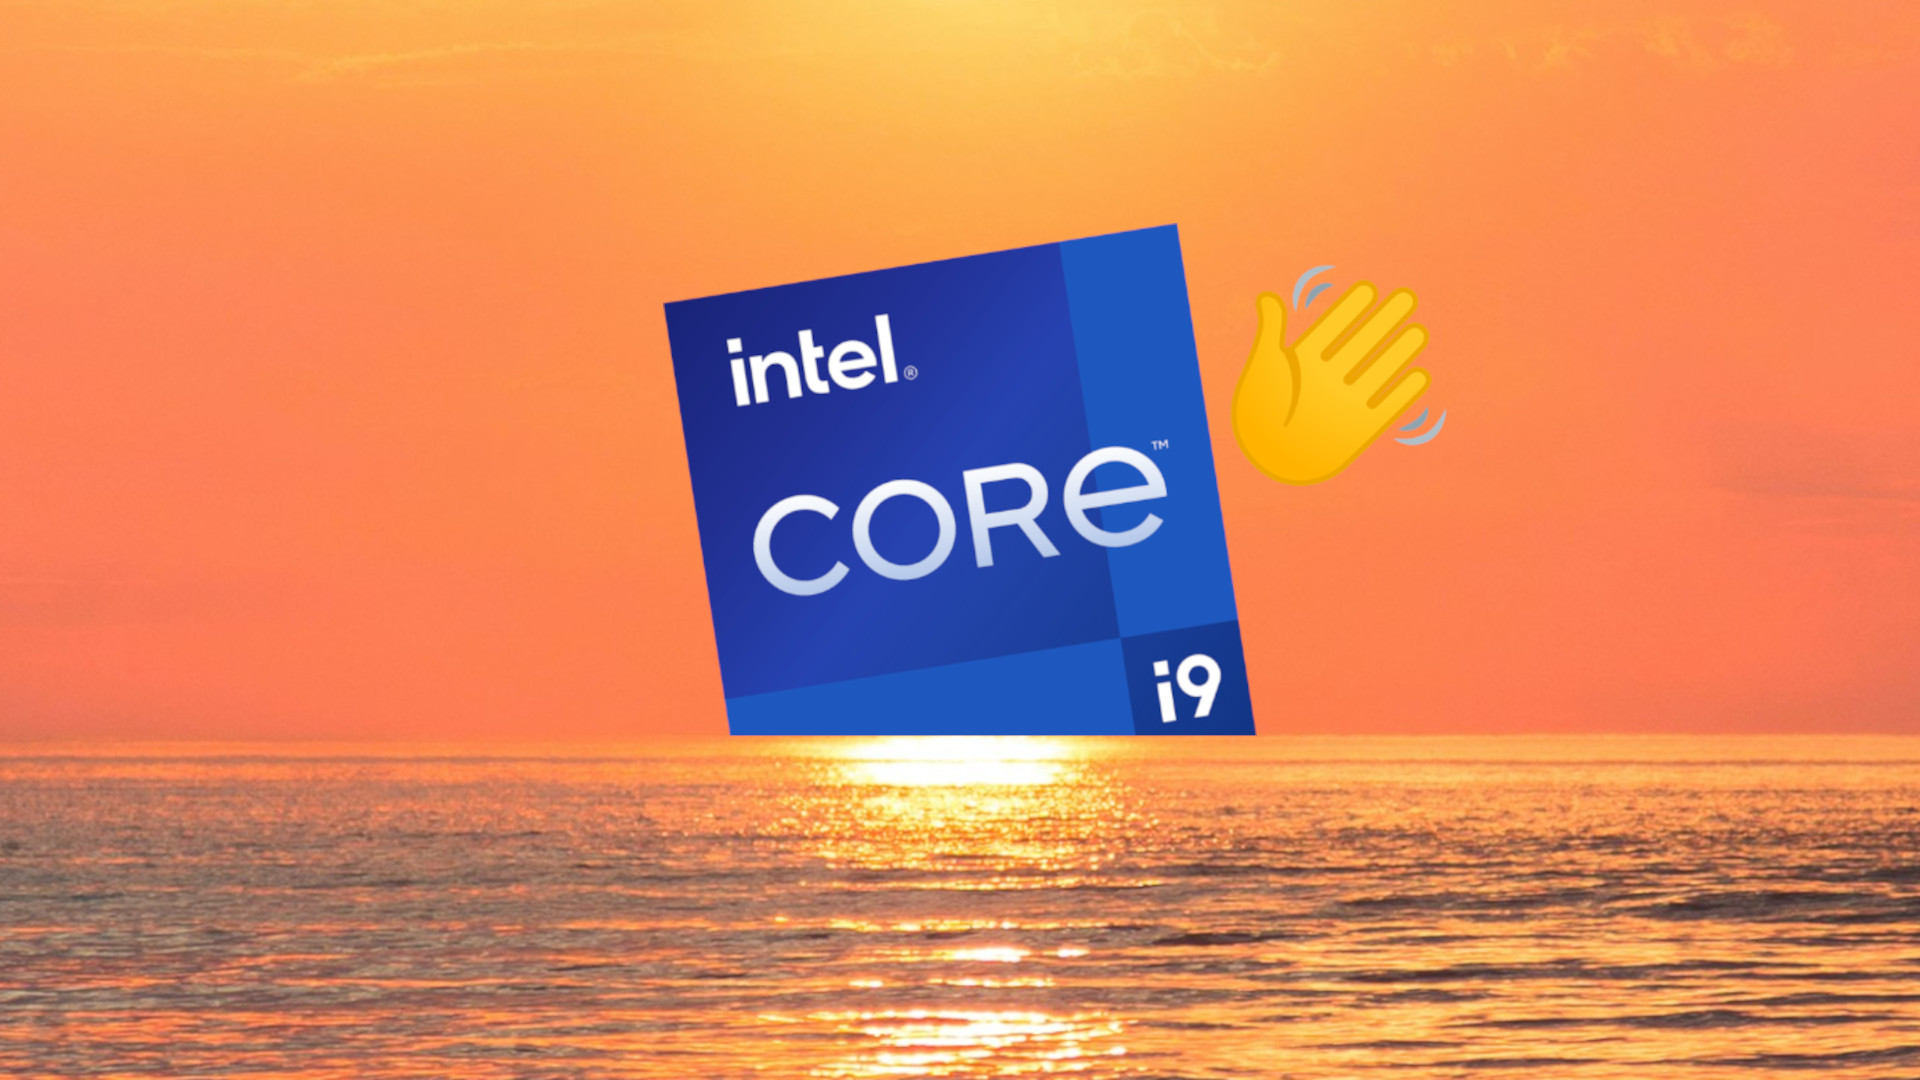 The last Intel Core i9 CPU arrives next week according to new leak